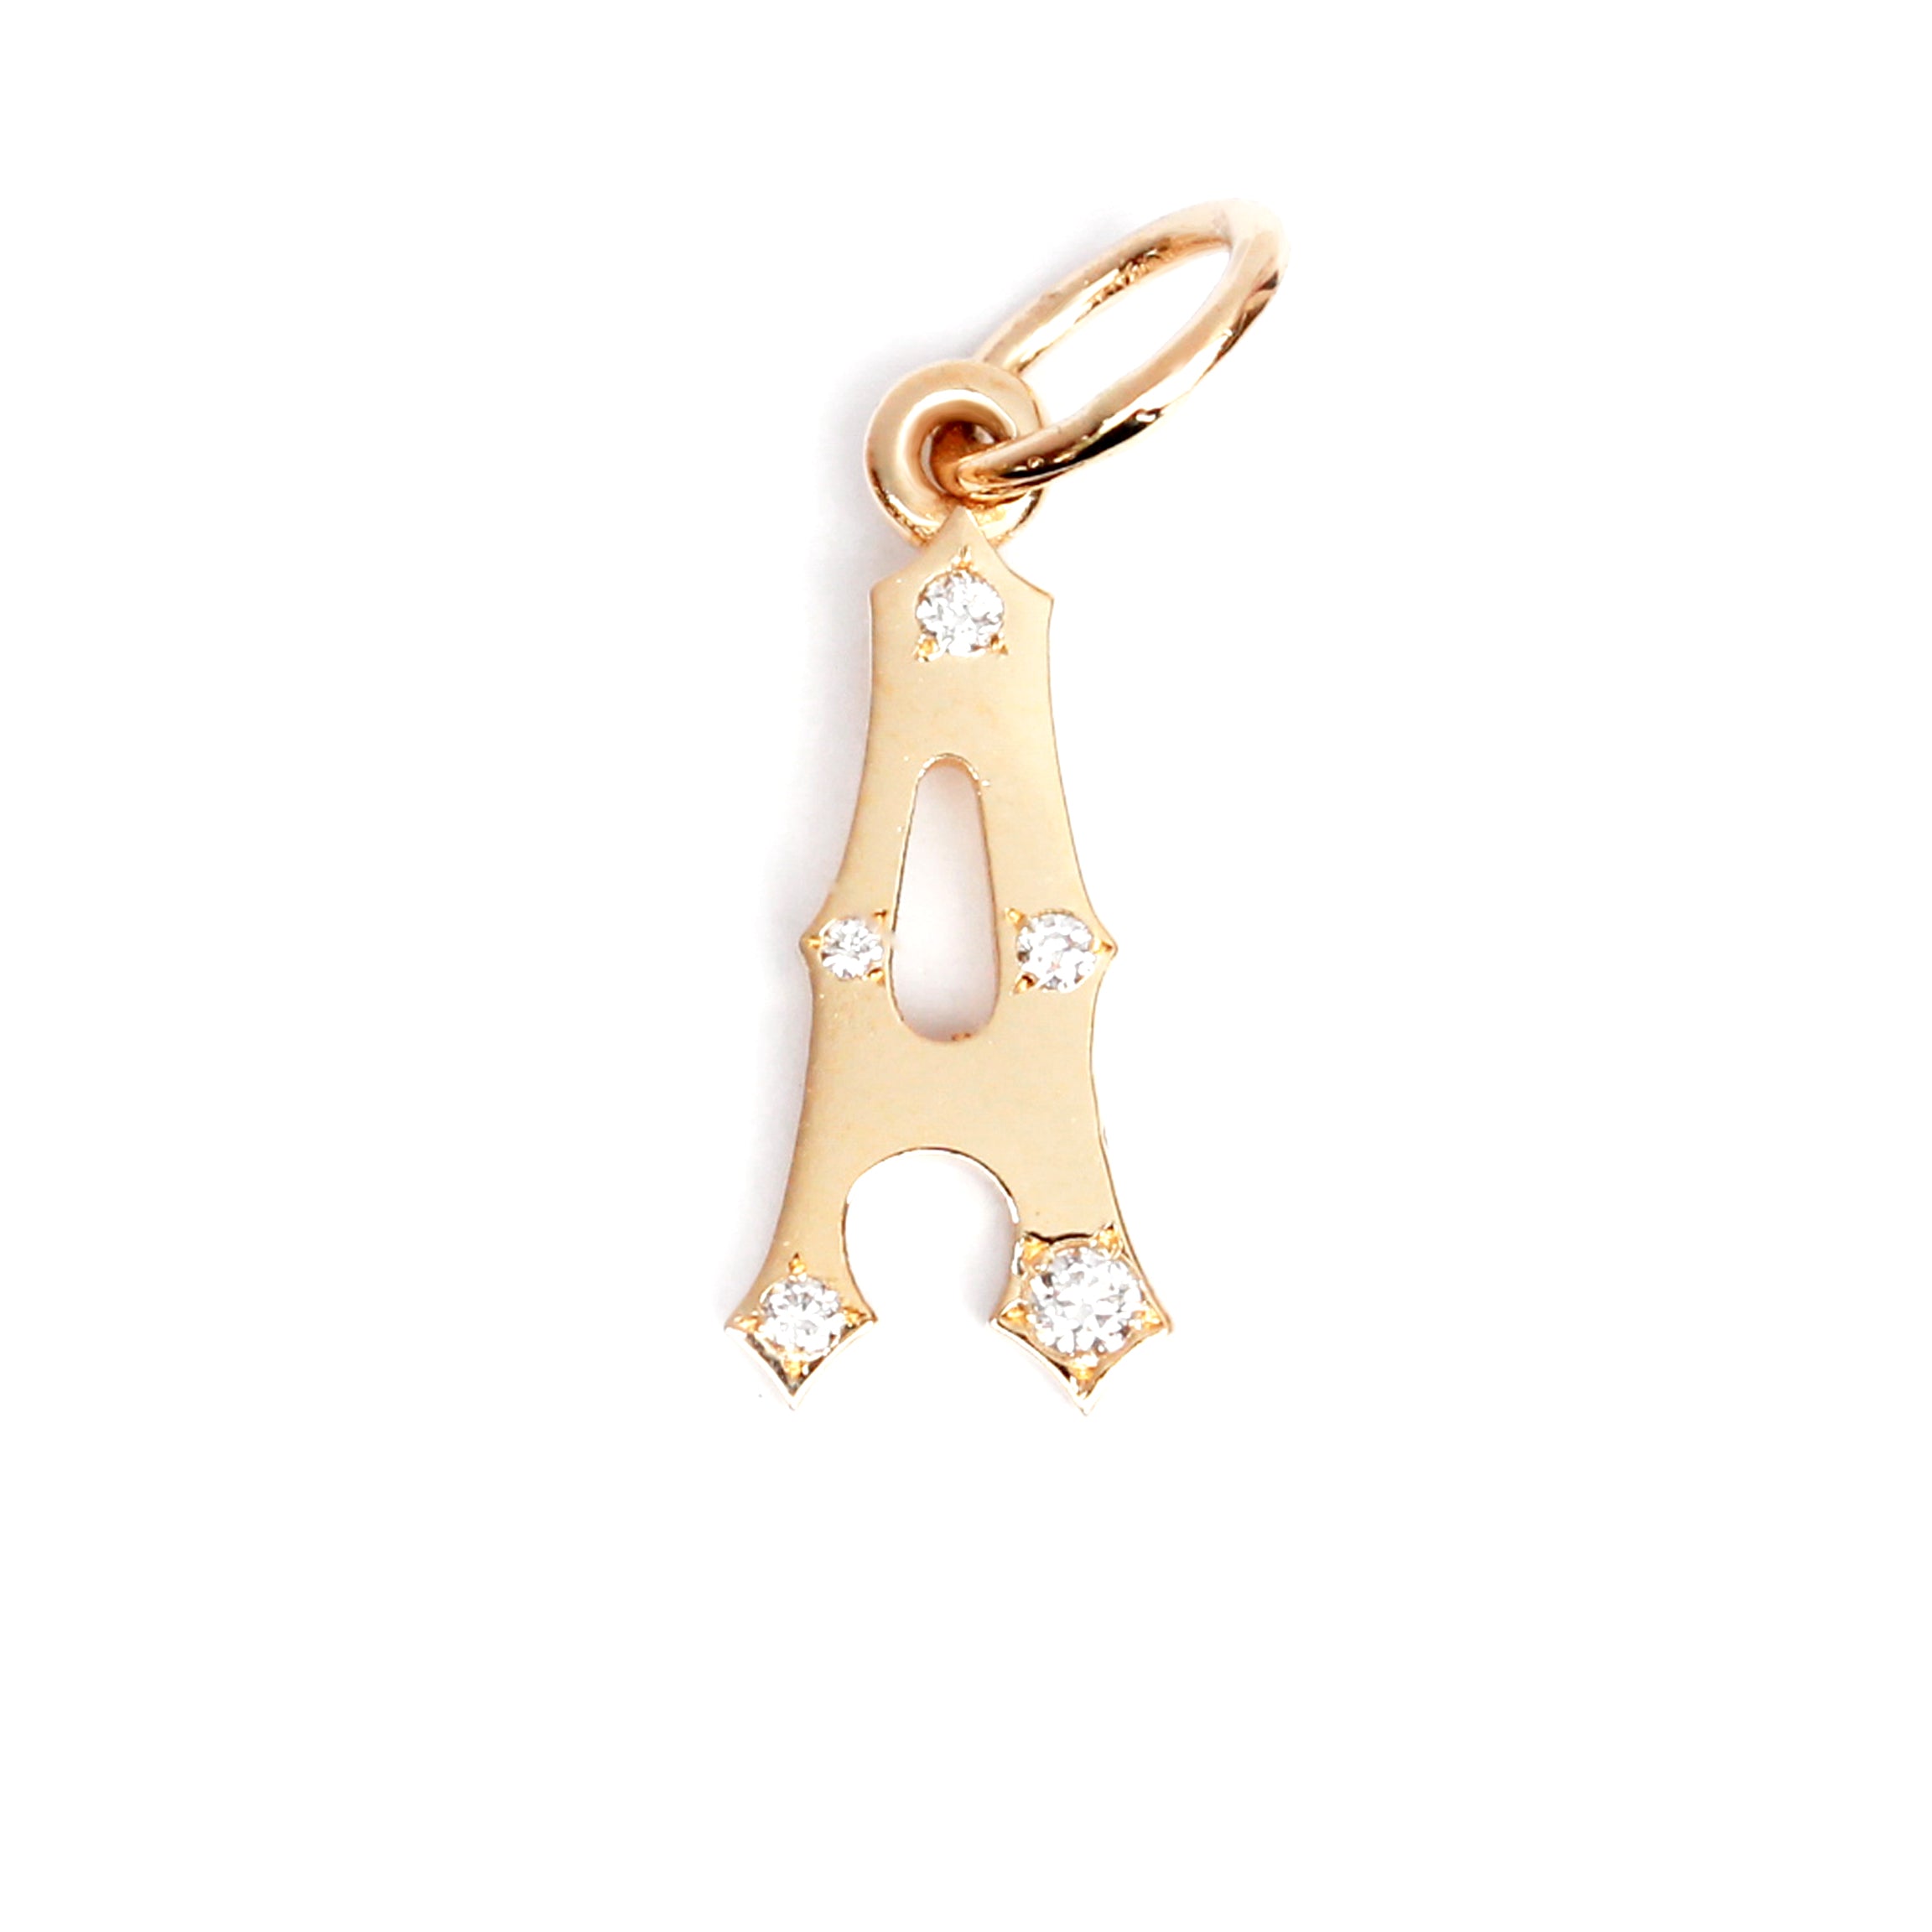 Gumbo Initial Pendant Diamond Dots 14k Gold Personalized Jewelry